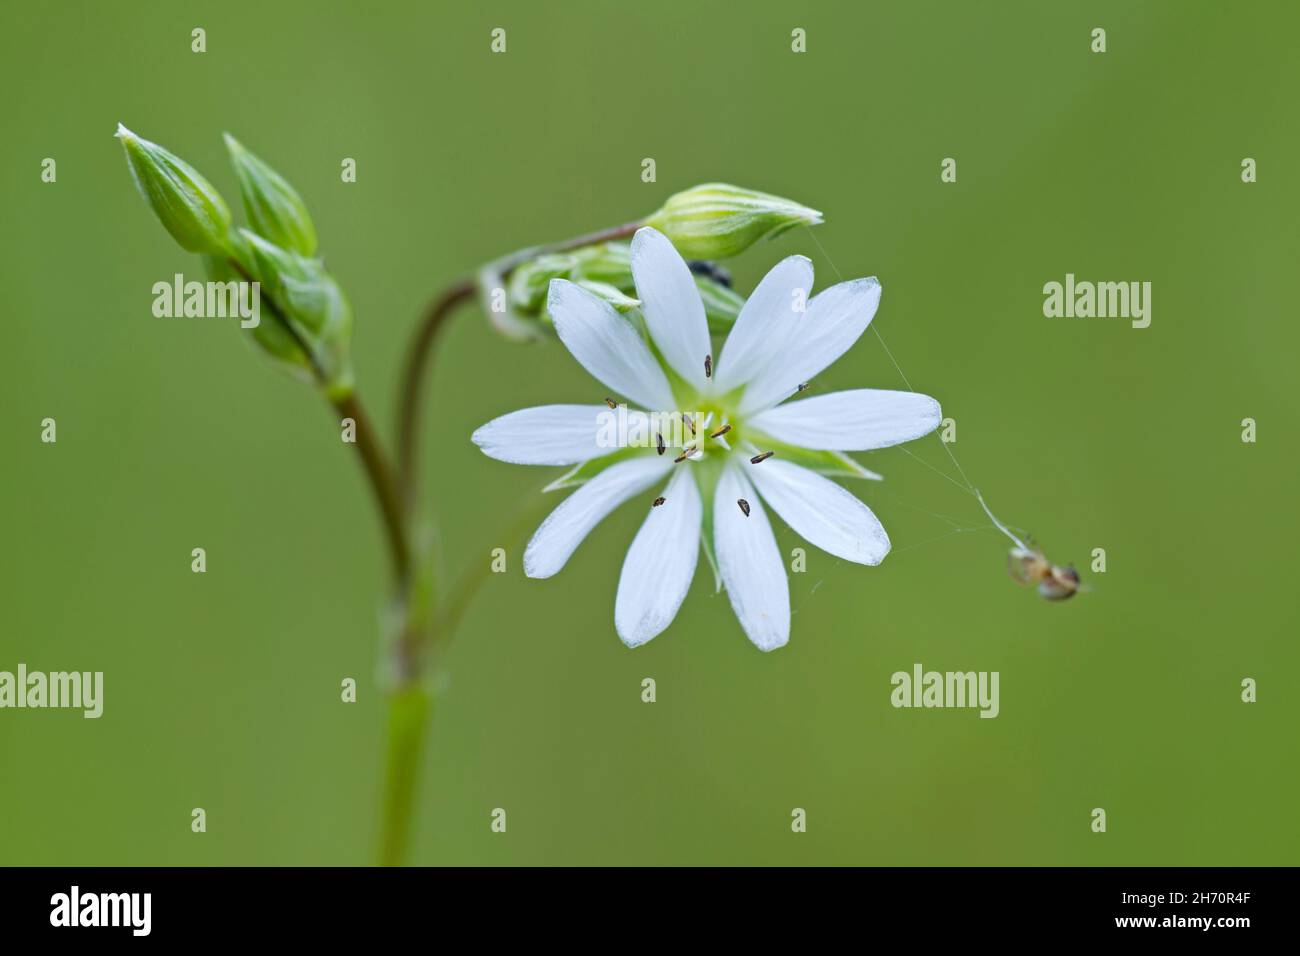 Grassleaf Starwort, Common Stitchwort (Stellaria graminea), flowering stalk. Germany Stock Photo